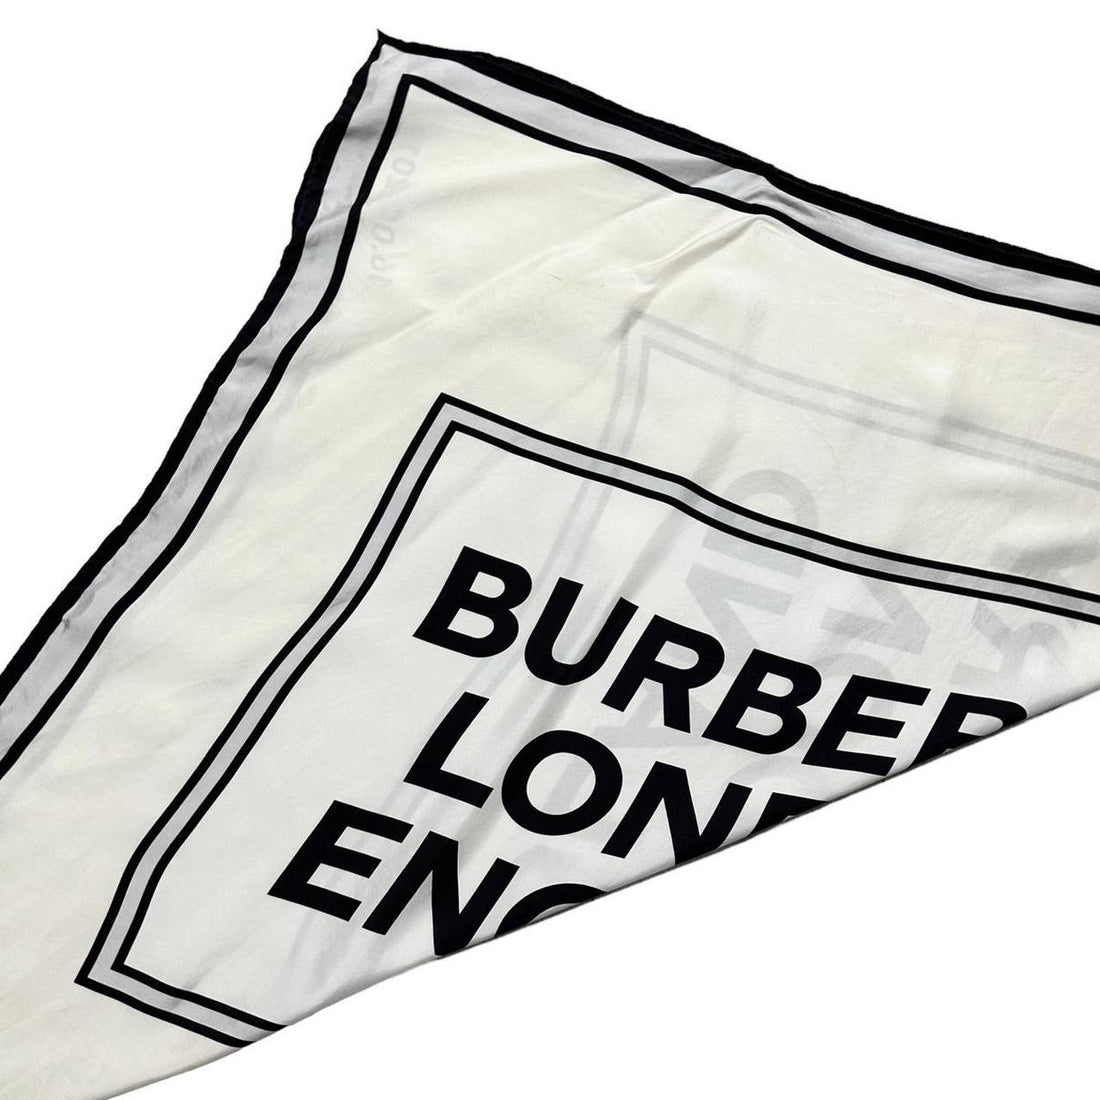 Burberry London England Silk Scarf